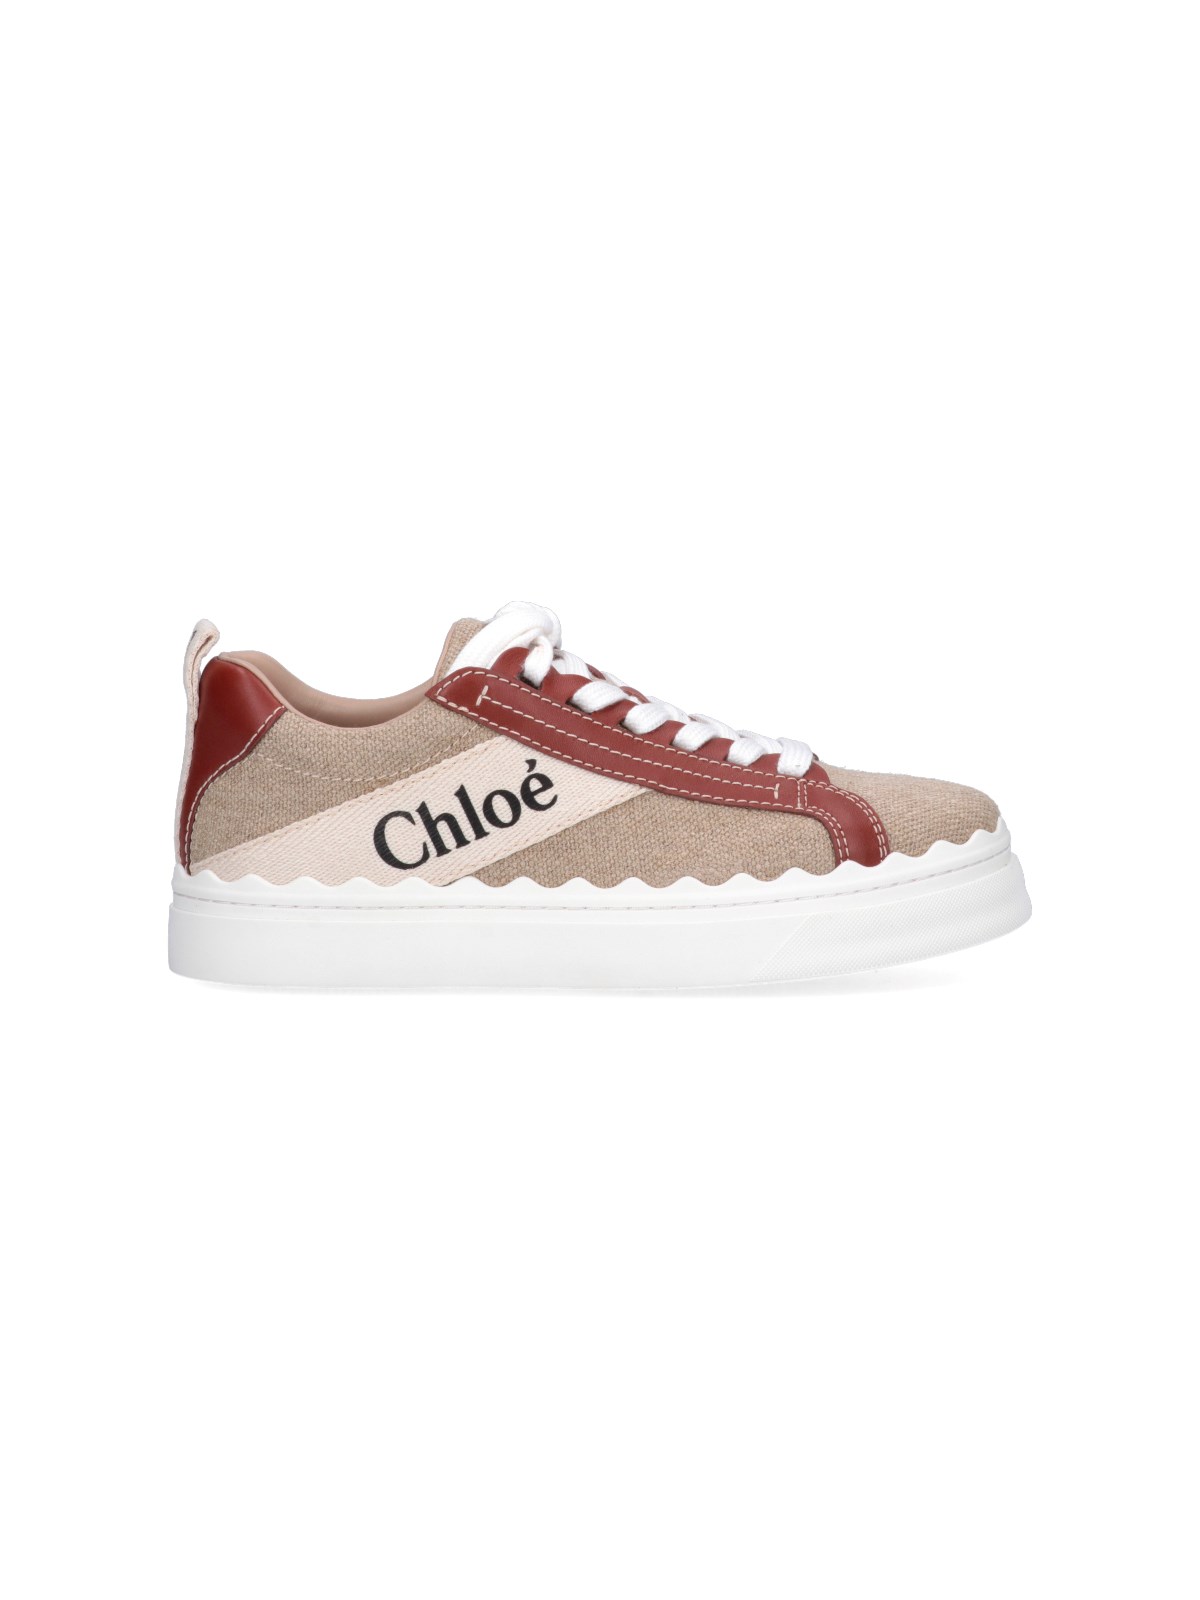 Chloé 'lauren' Sneakers In Brown